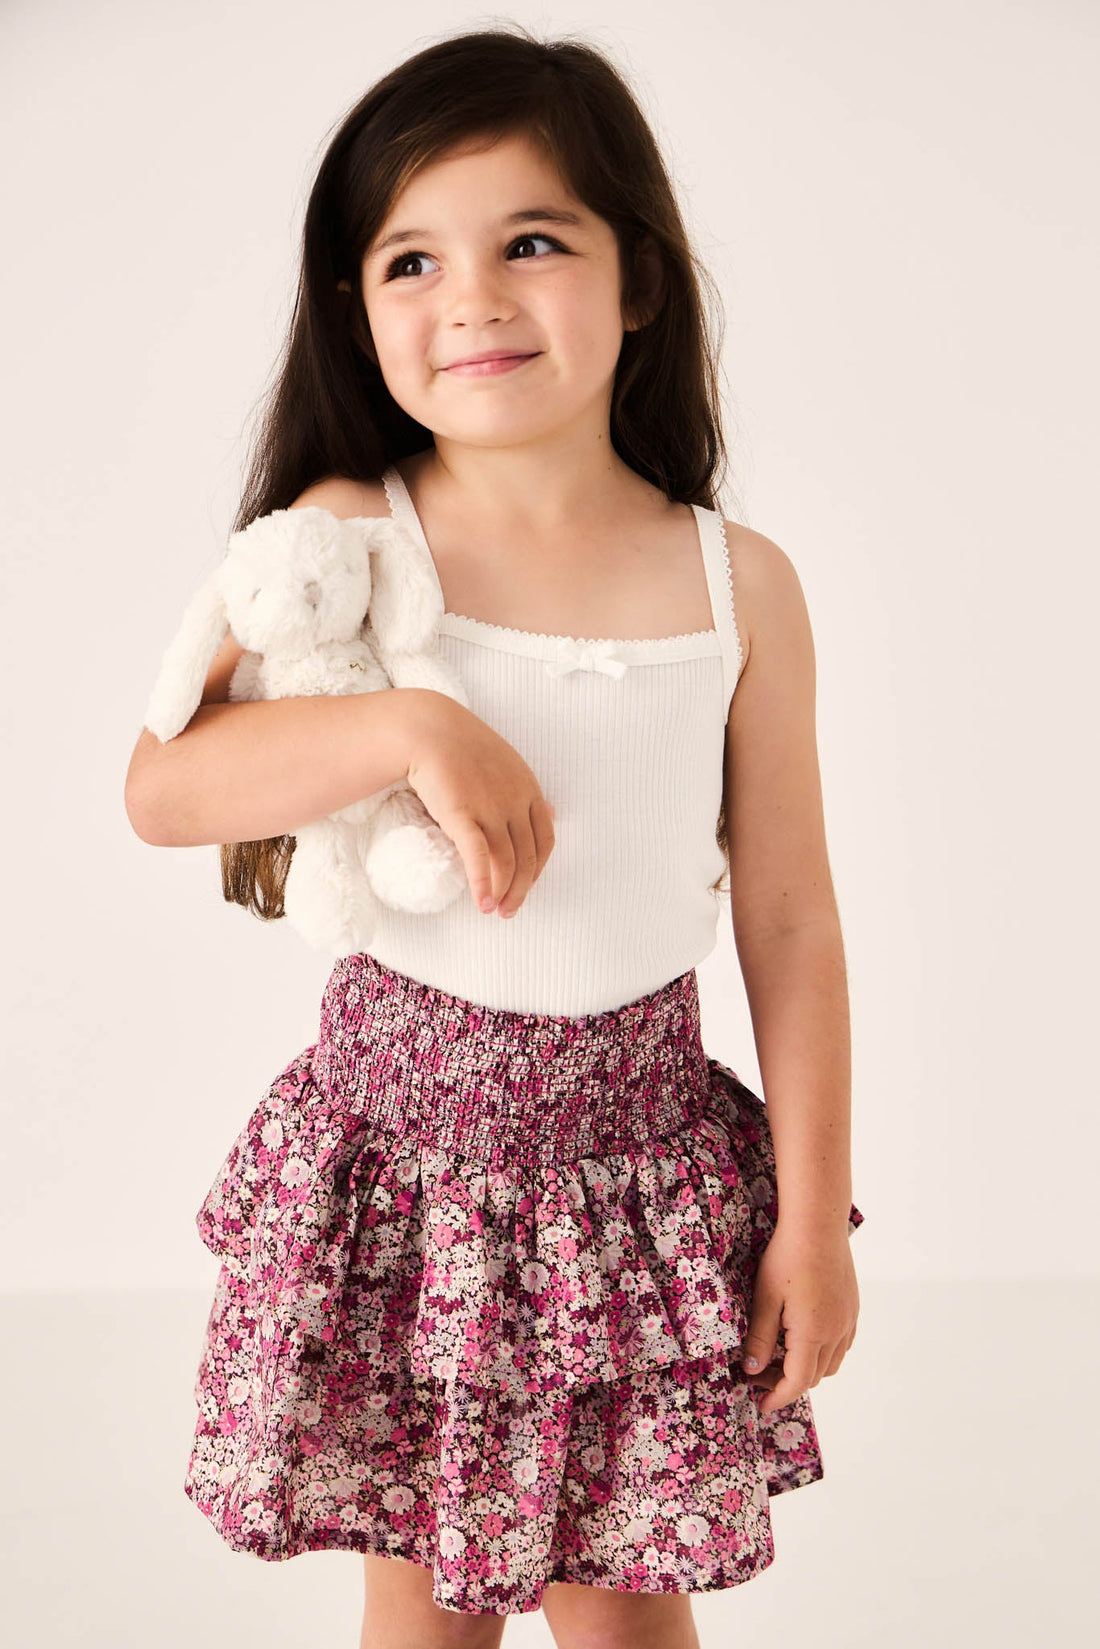 Organic Cotton Samantha Skirt - Garden Print Childrens Skirt from Jamie Kay USA